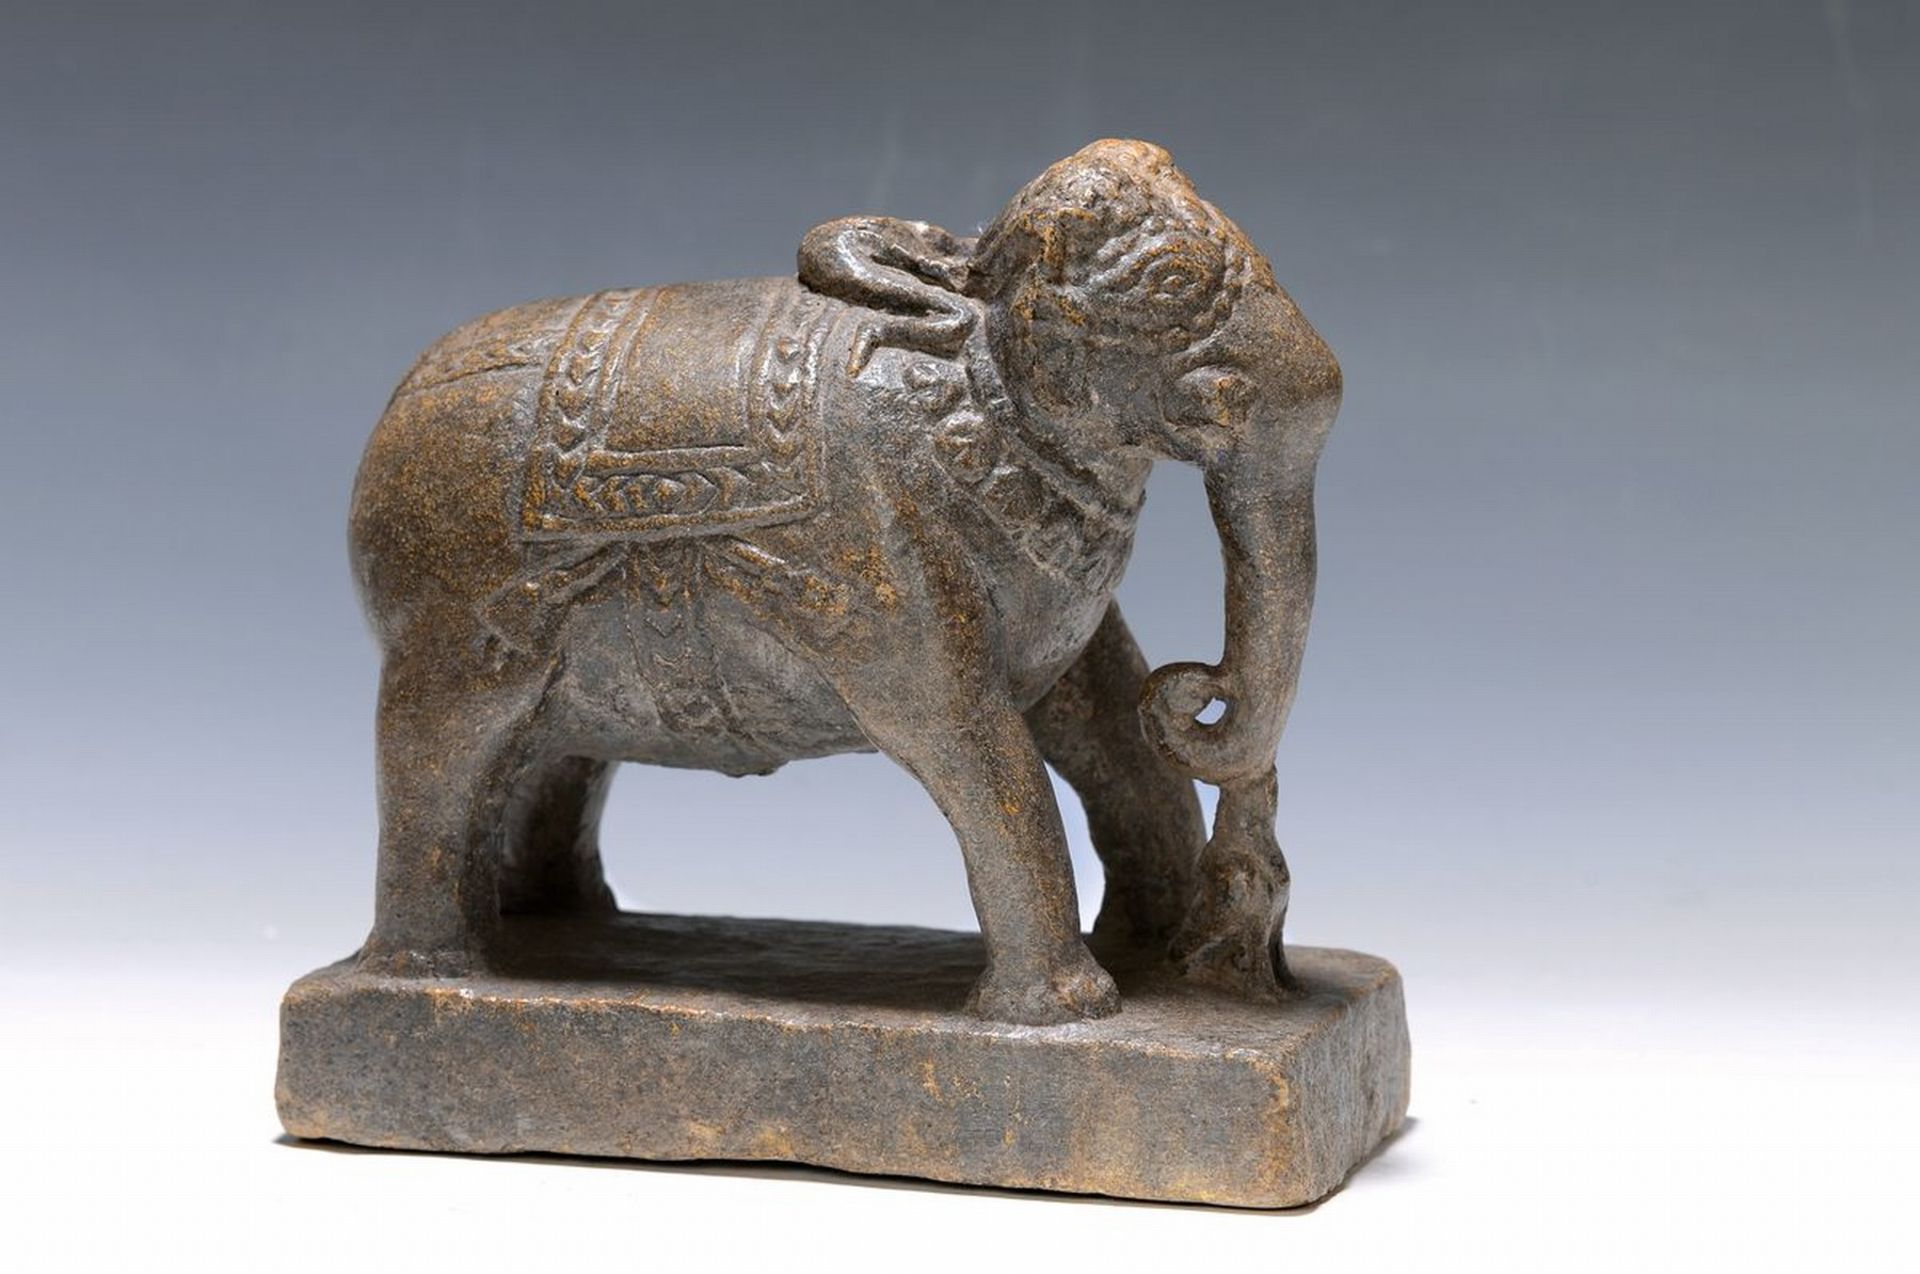 Skulptur eines Elefanten, Rajastan Indien, um 1800,